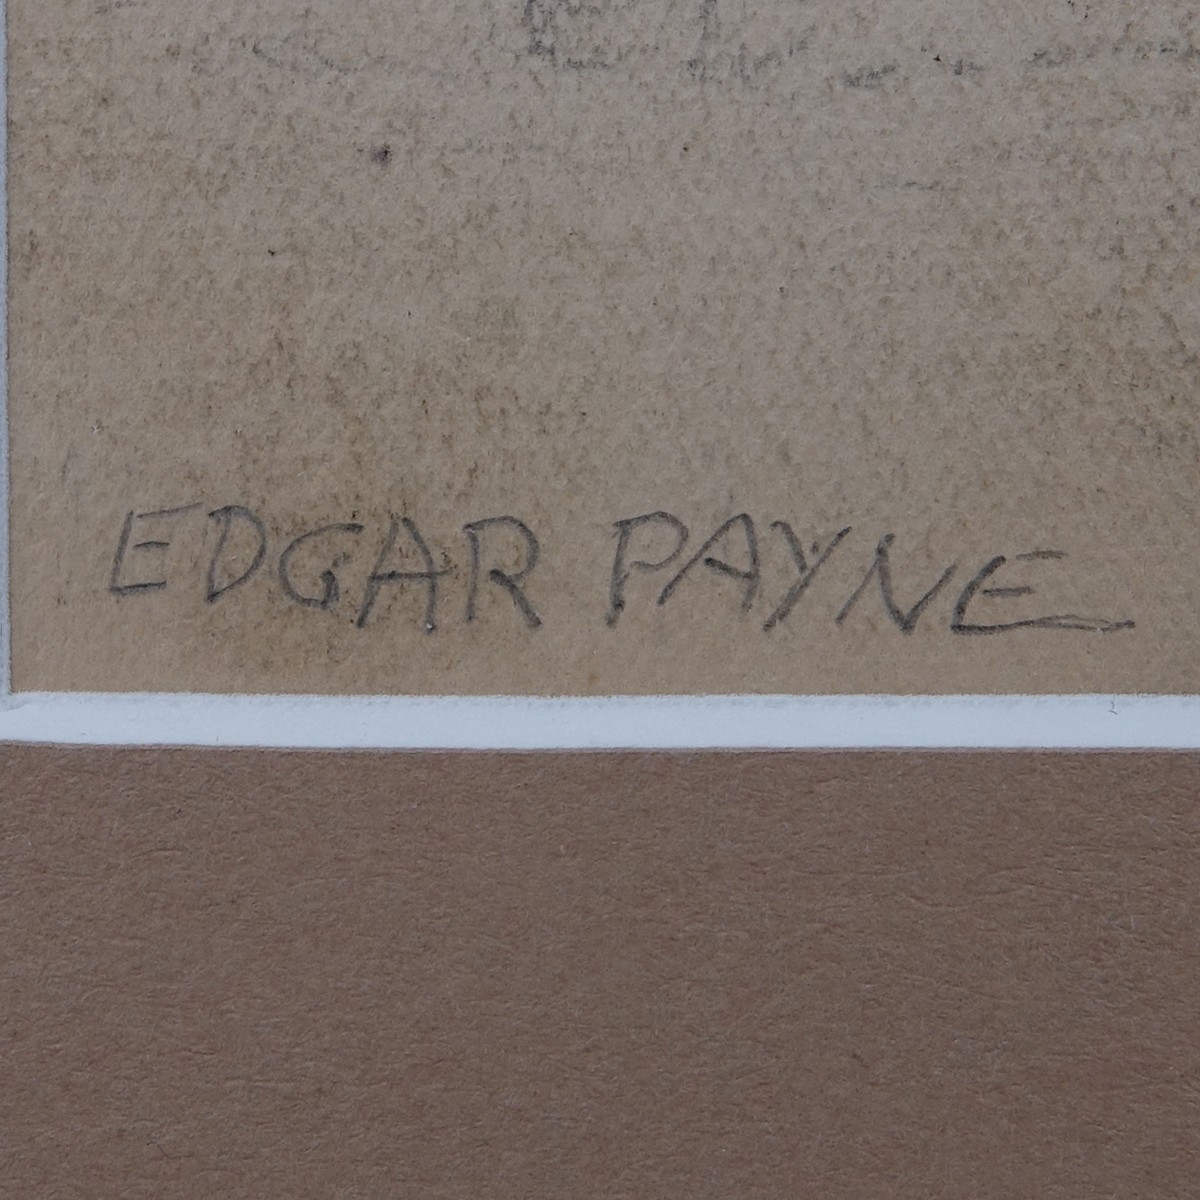 Edgar Alwin Payne, American (1883–1947) Pencil on Paper, Landscape. Signed lower left.